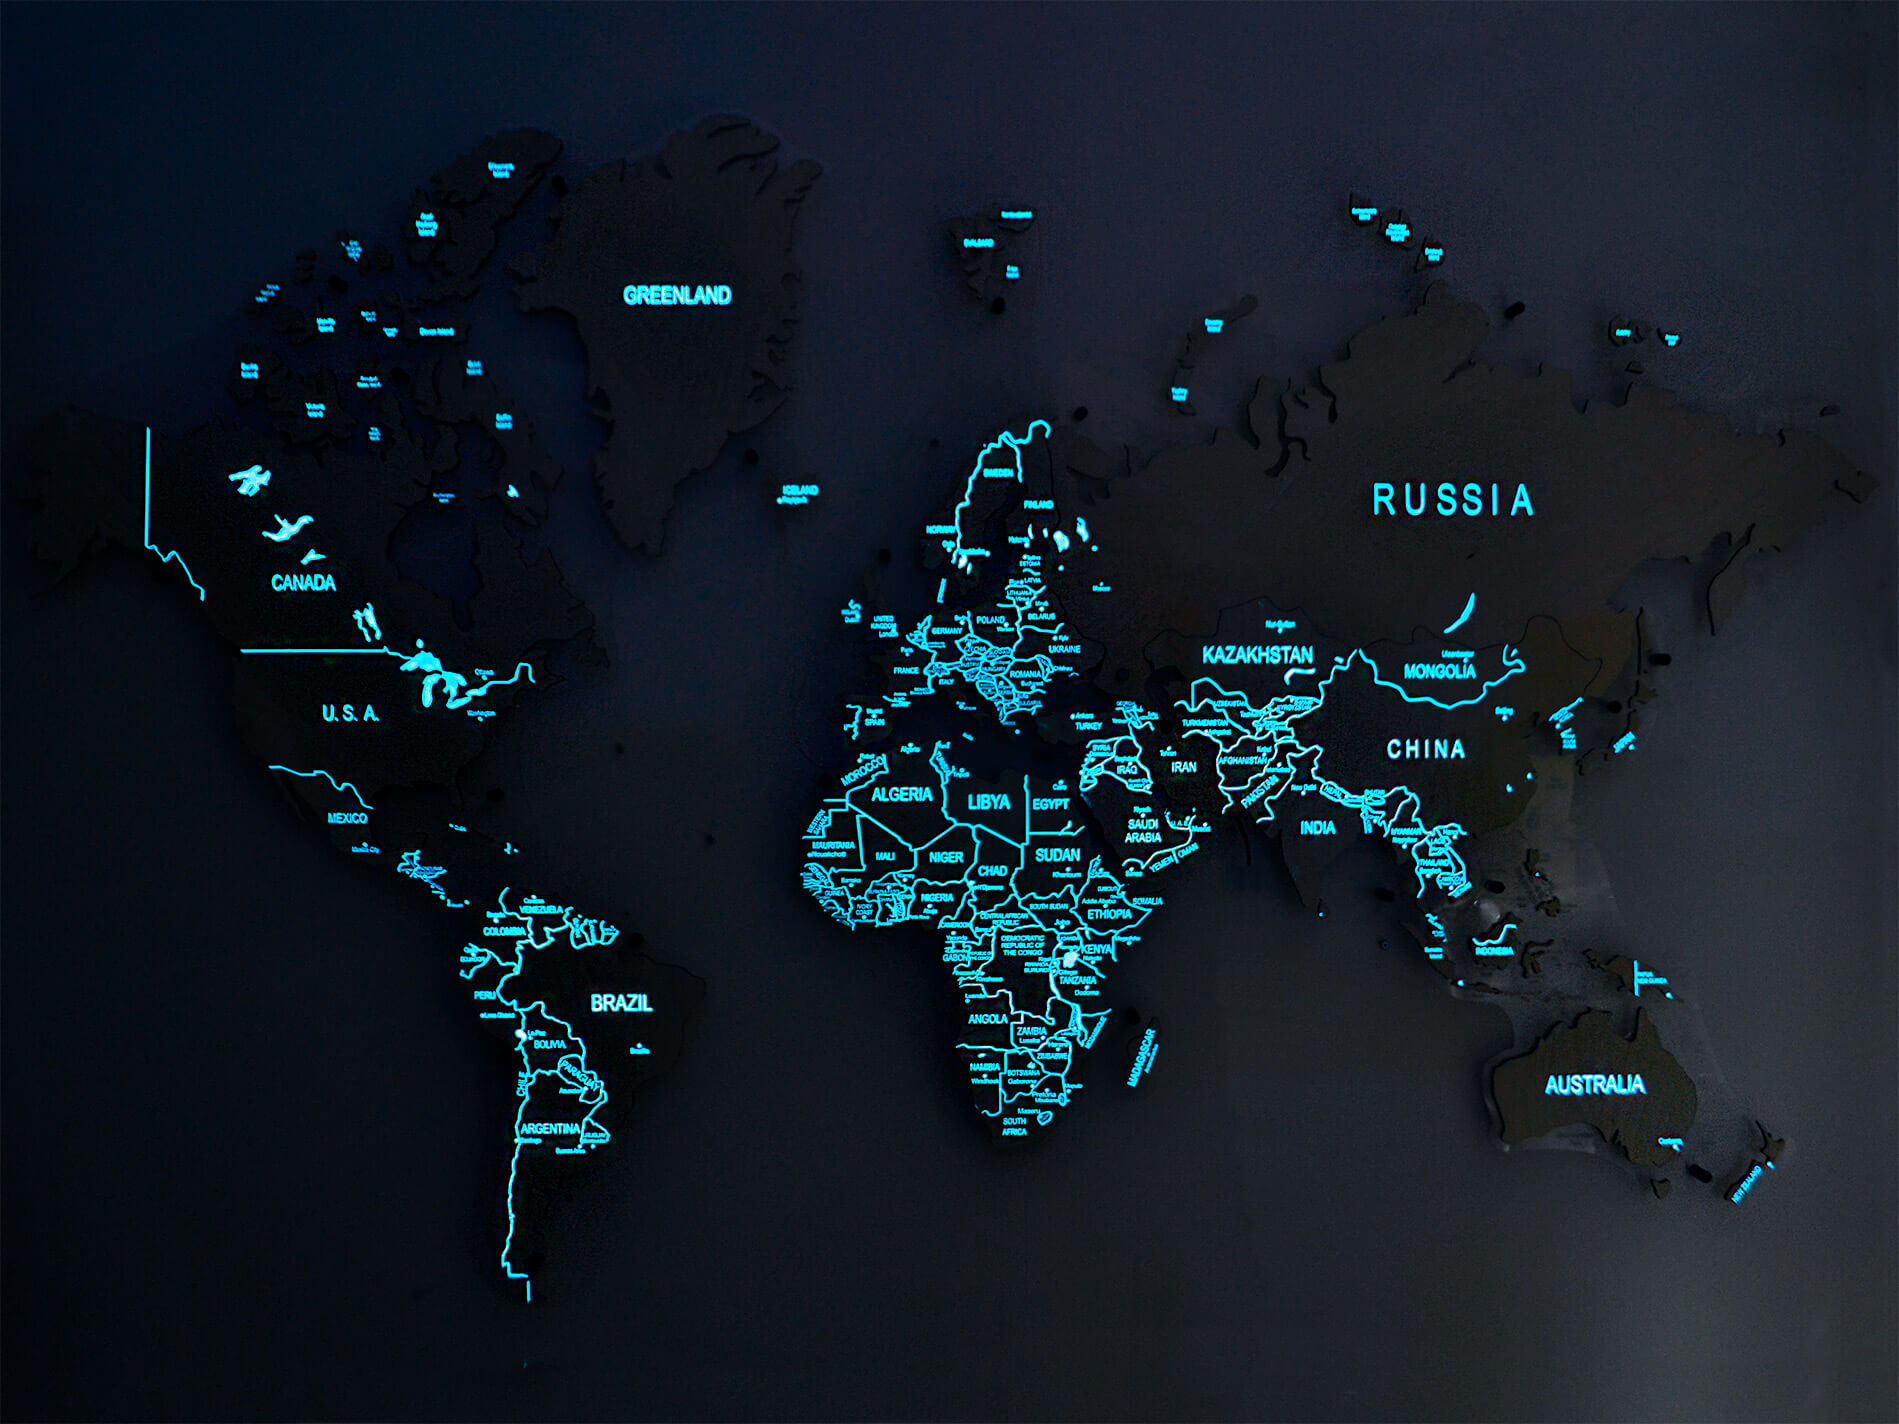 Светящаяся карта мира, карта мира с подсветкой на стену